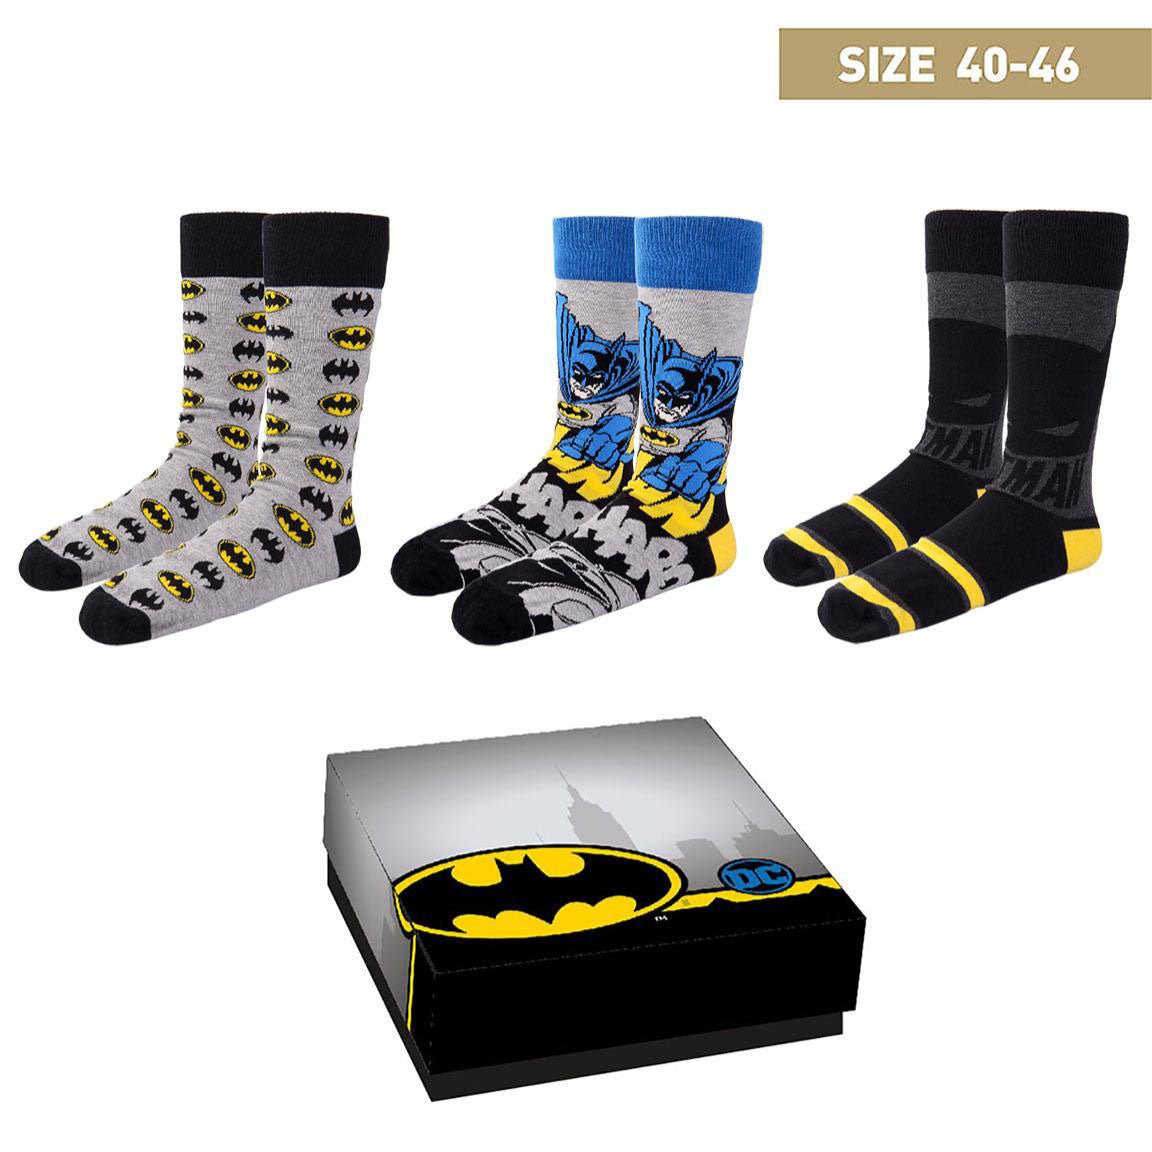 Pack 3 Pairs of DC Comics Socks - Batman 